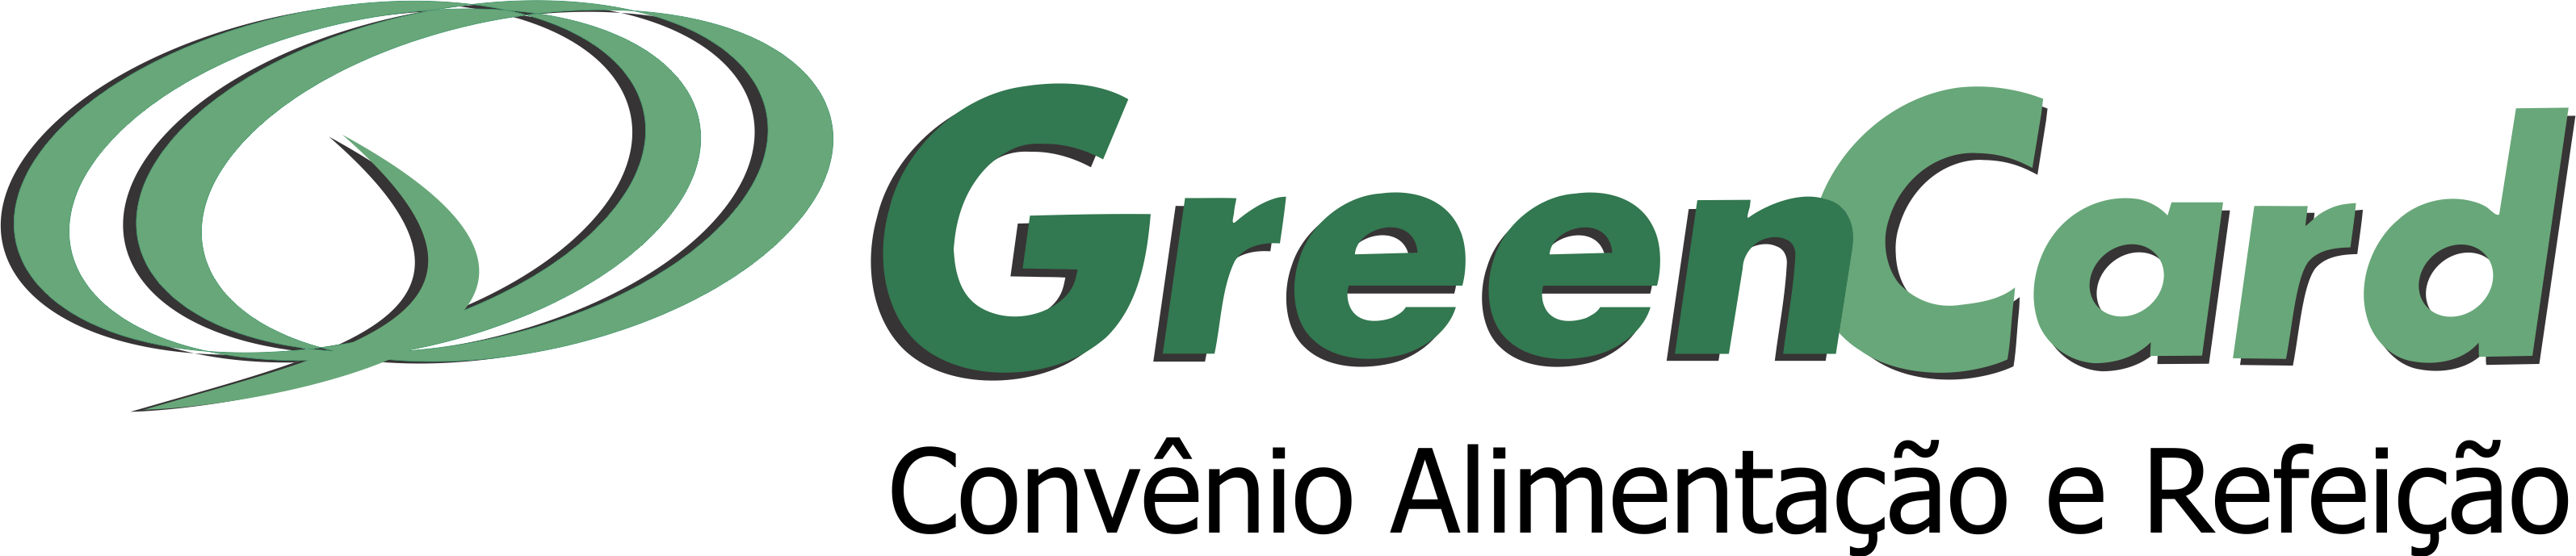 Carta verde